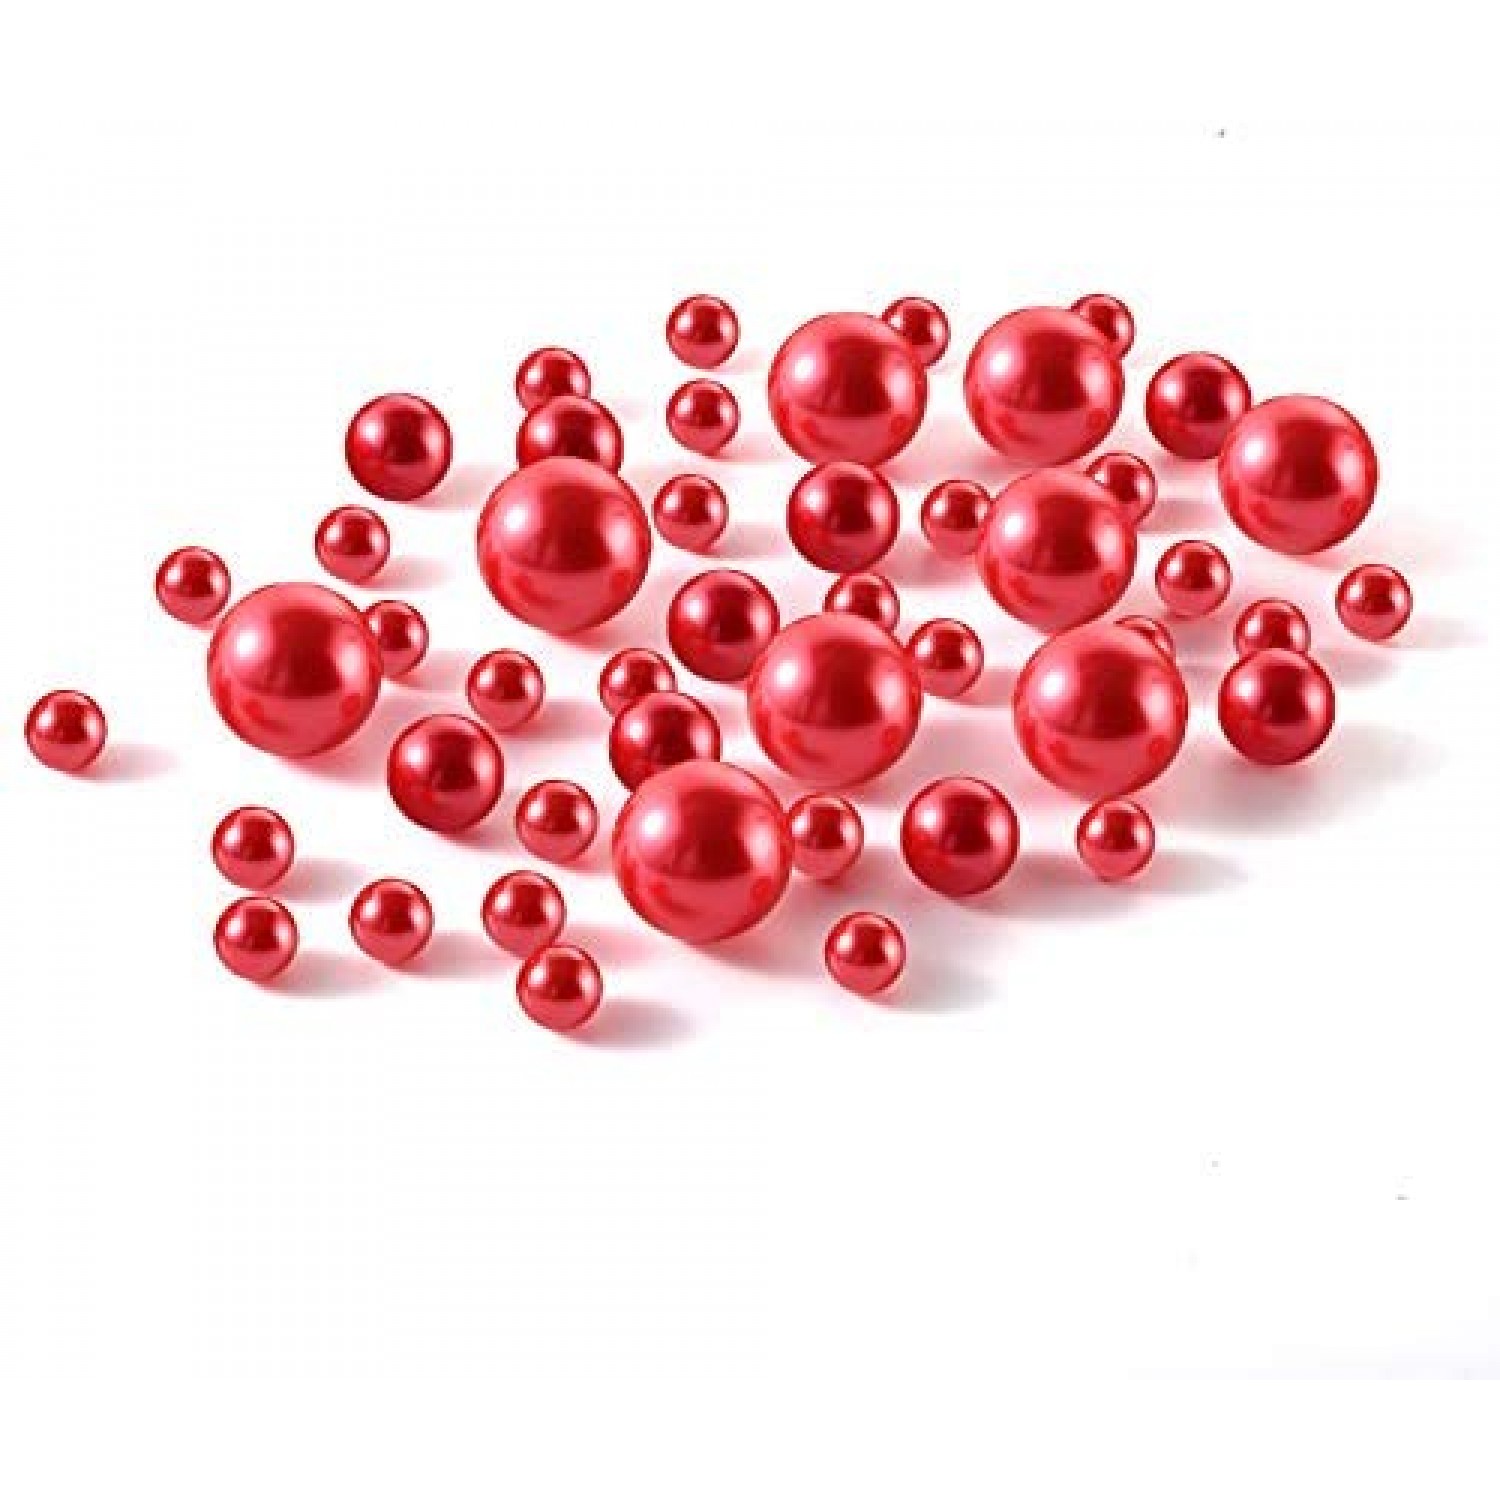 Buy Floating Beads online